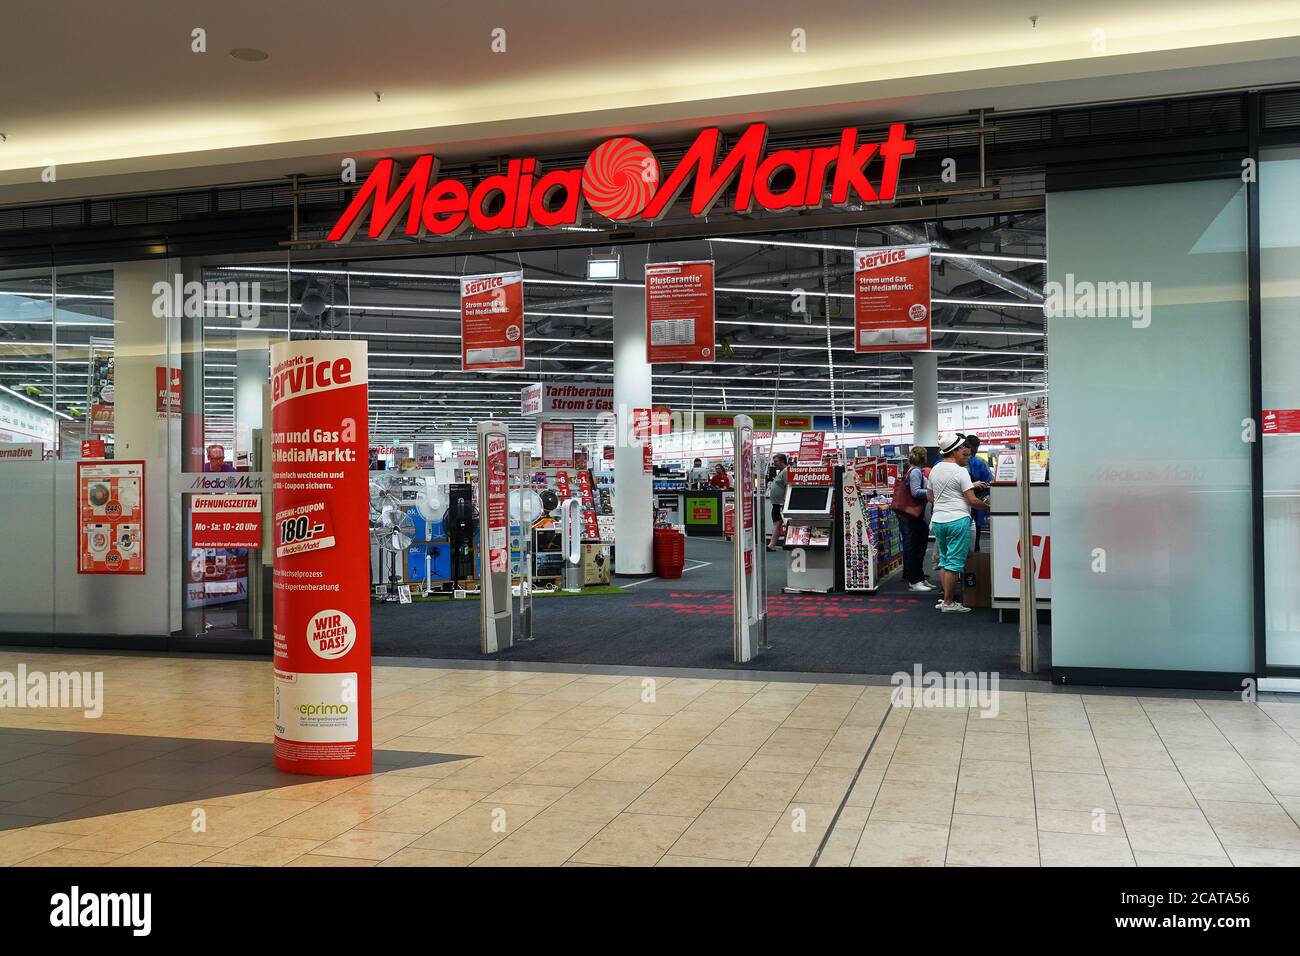 Sucursal de Media Markt Store Fotografía de stock - Alamy